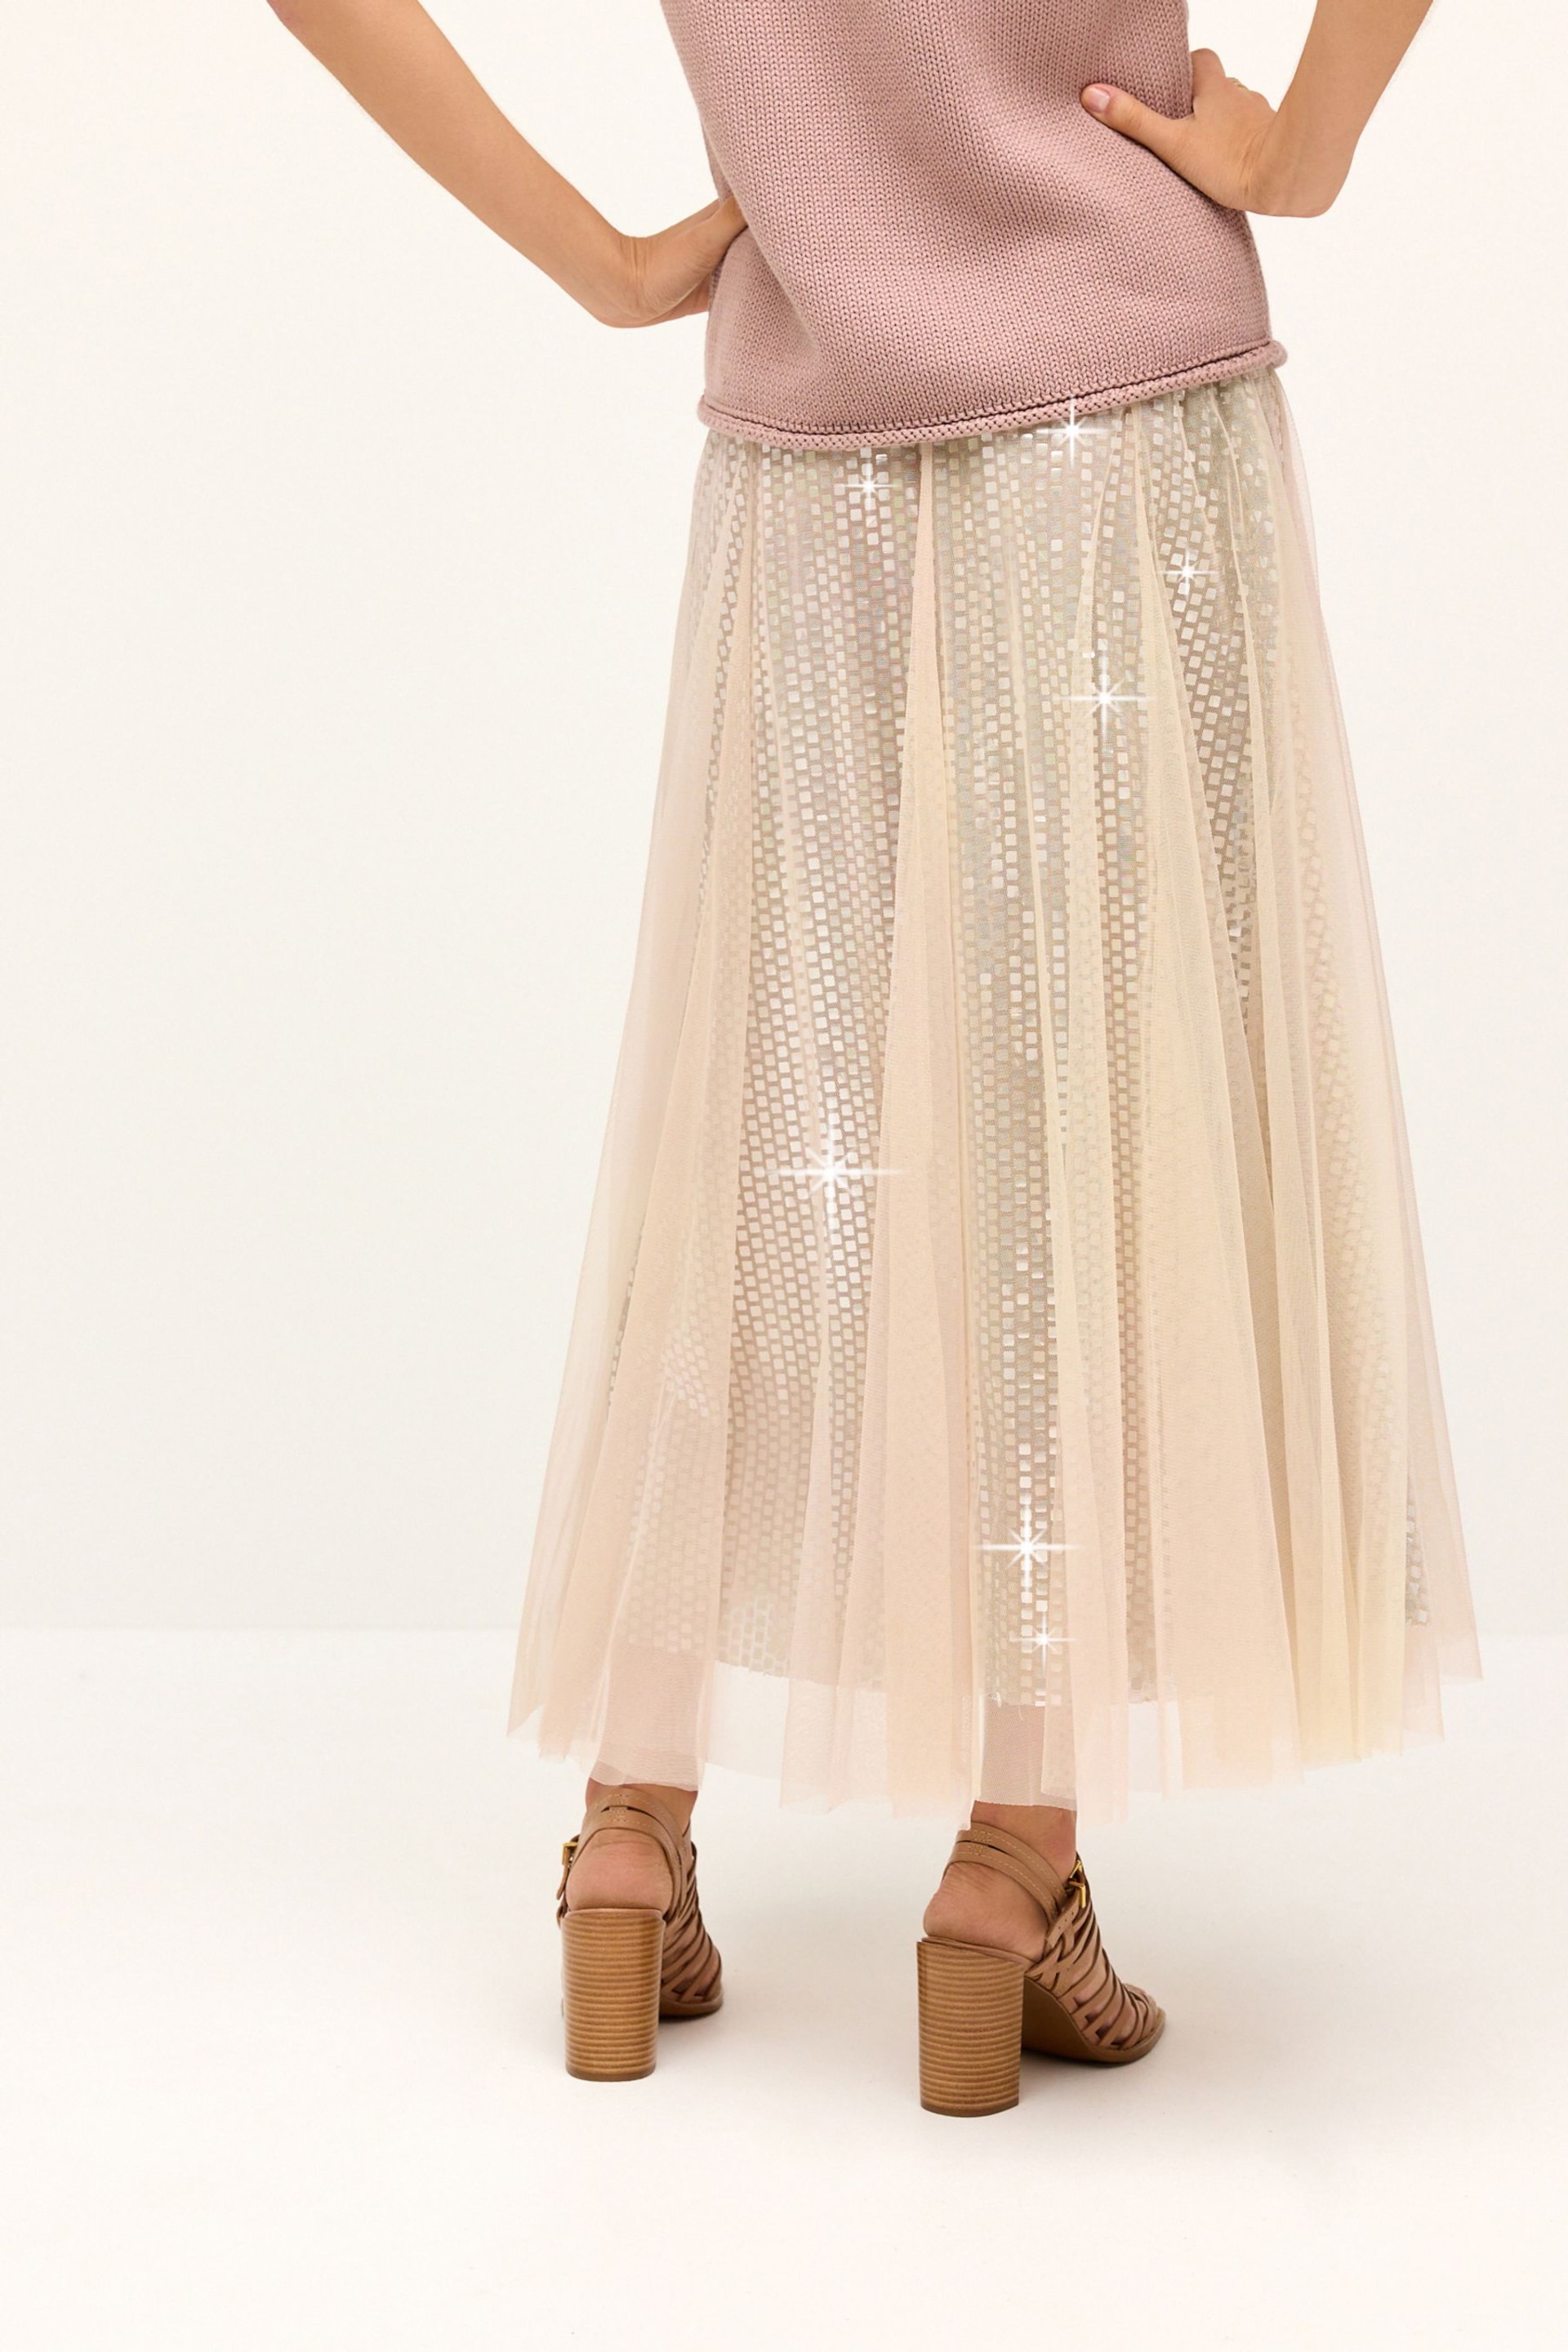 Neutral Sparkle Mesh Midi Skirt - Image 3 of 6